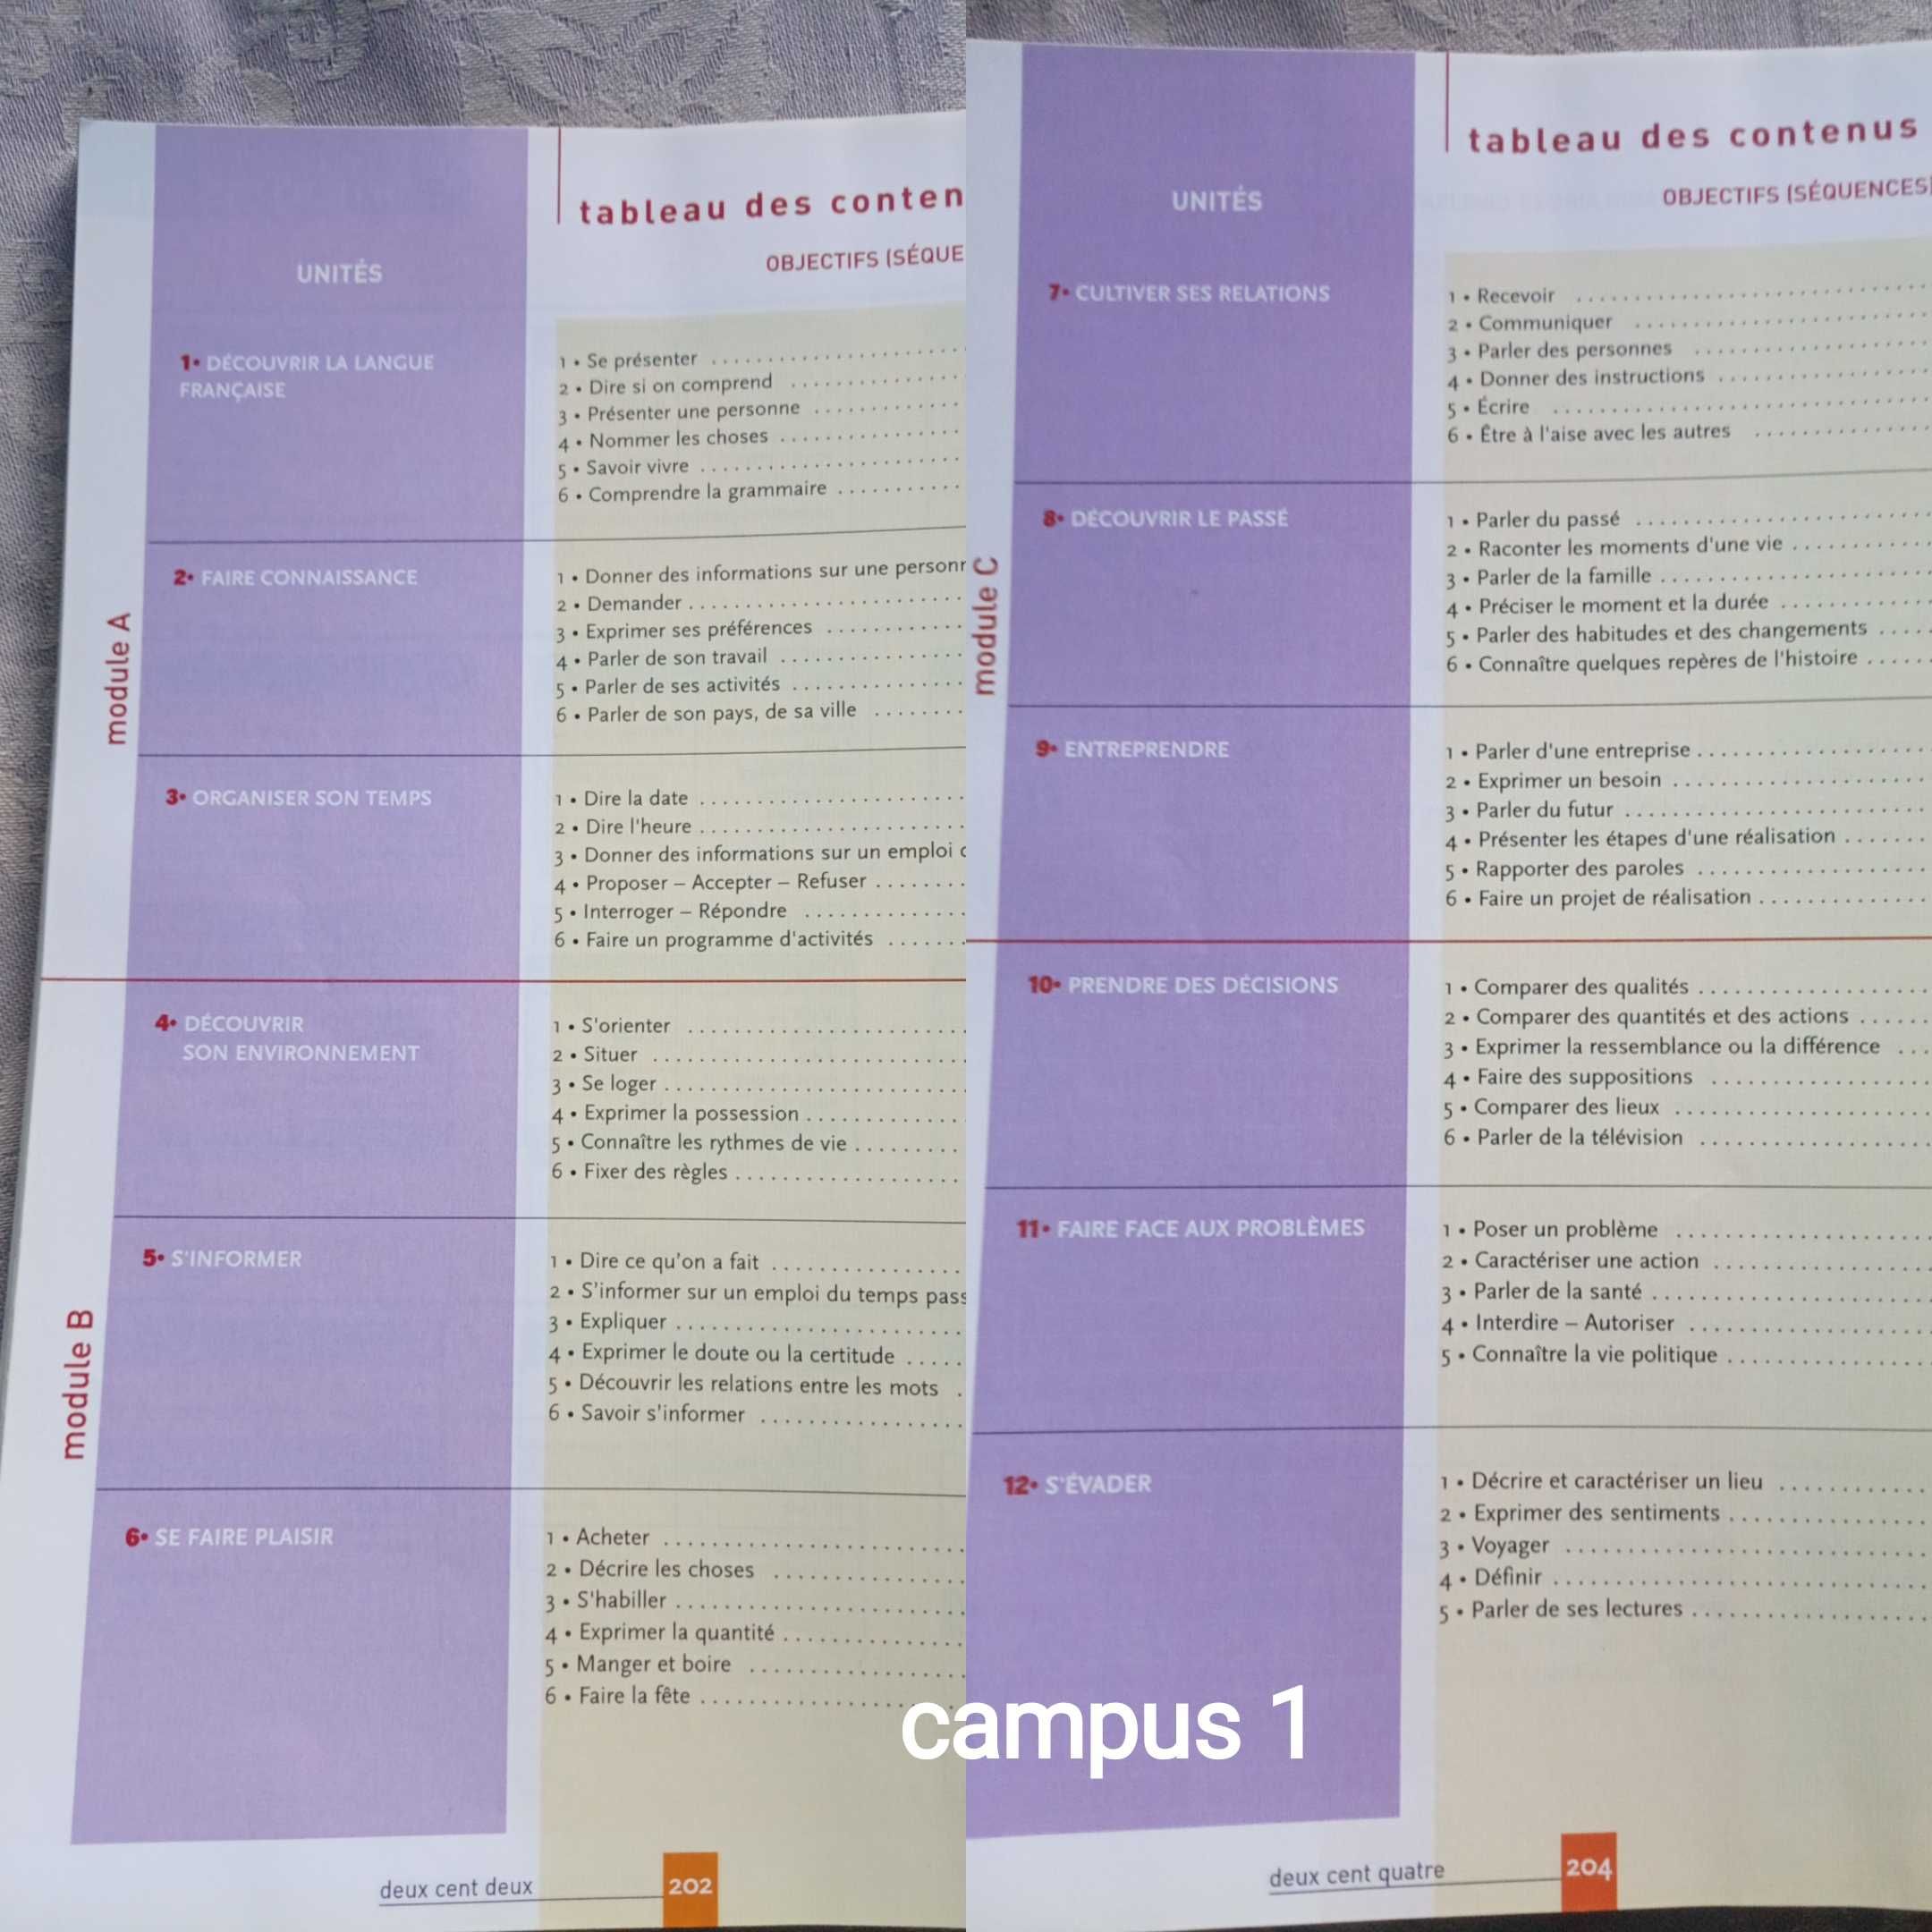 Учебници Campus по френски